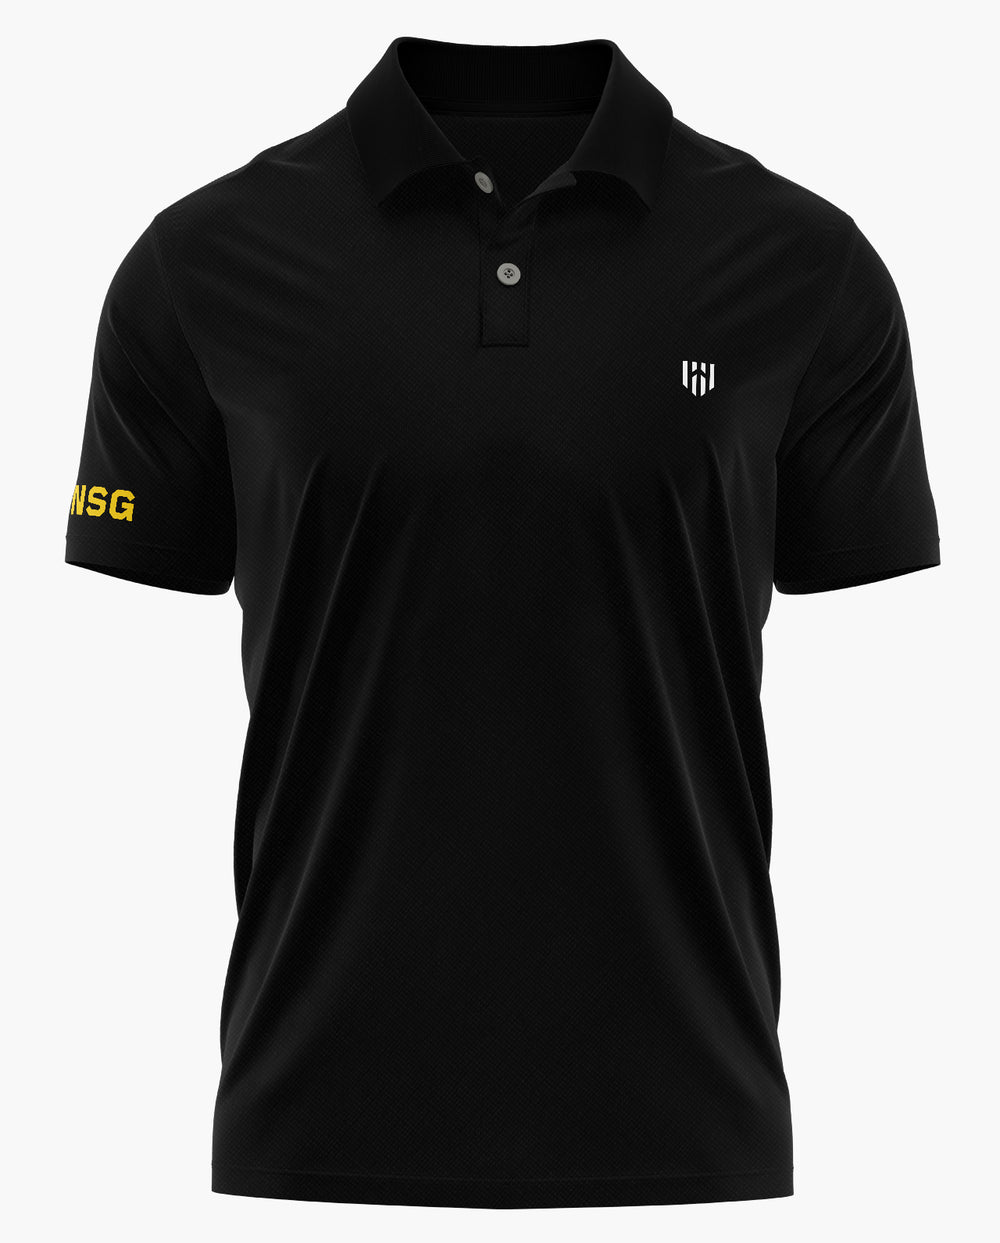 NSG AGENT Polo T-shirt - Aero Armour